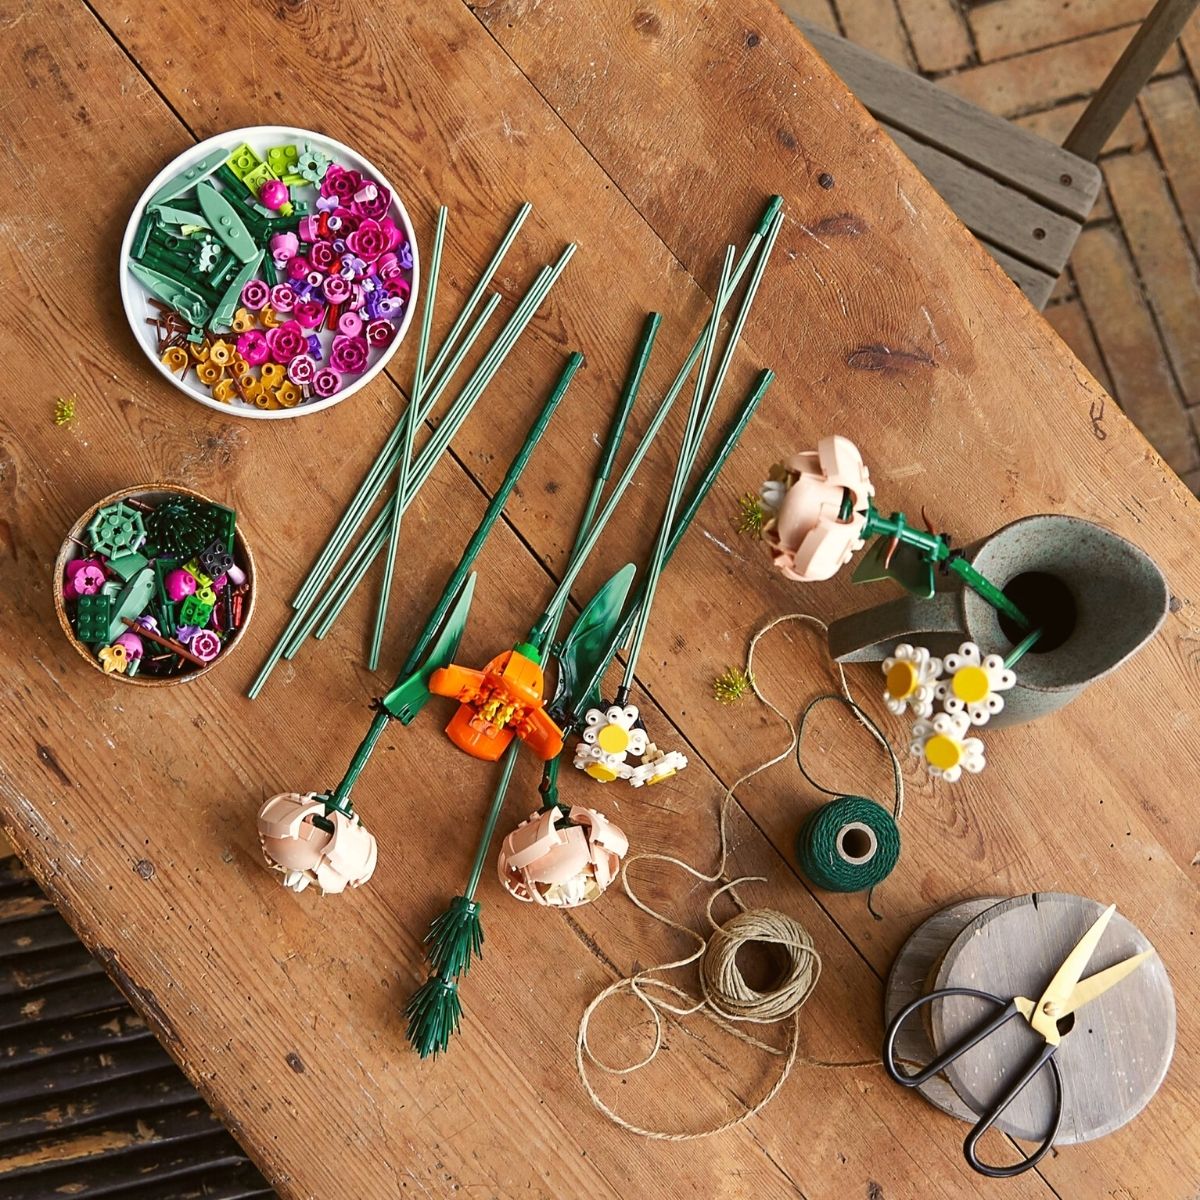 Lego Flower kit crafting featured on Thursd  